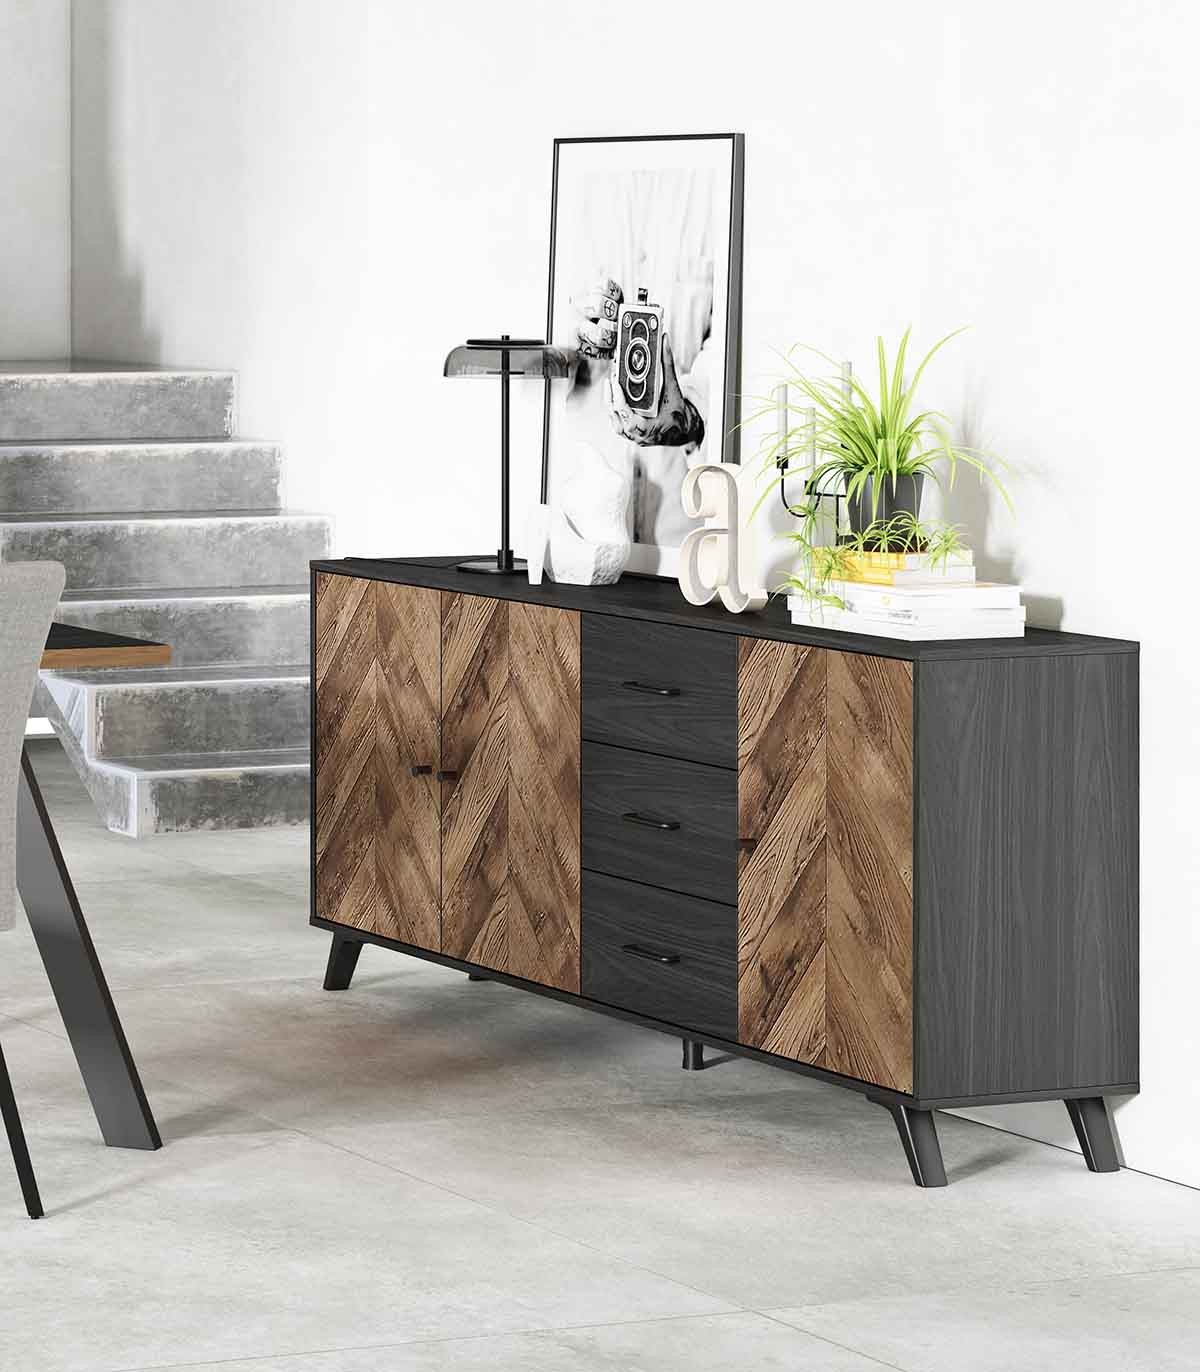 https://www.decoracionbeltran.com/59620-superlarge_default/mueble-buffet-aparador-en-madera-ceron.jpg